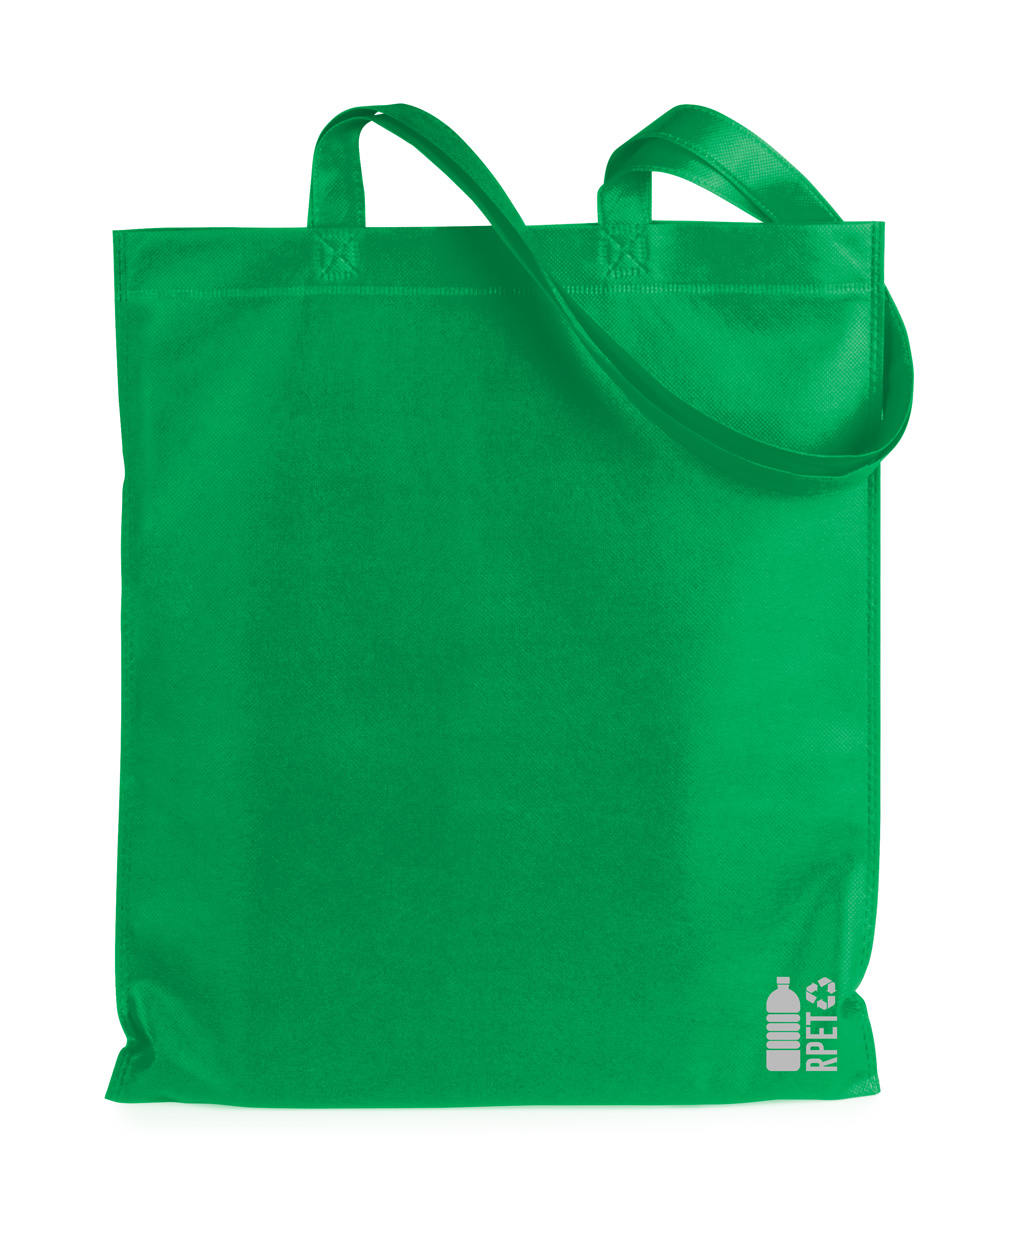 Rezzin RPET shopping bag - green